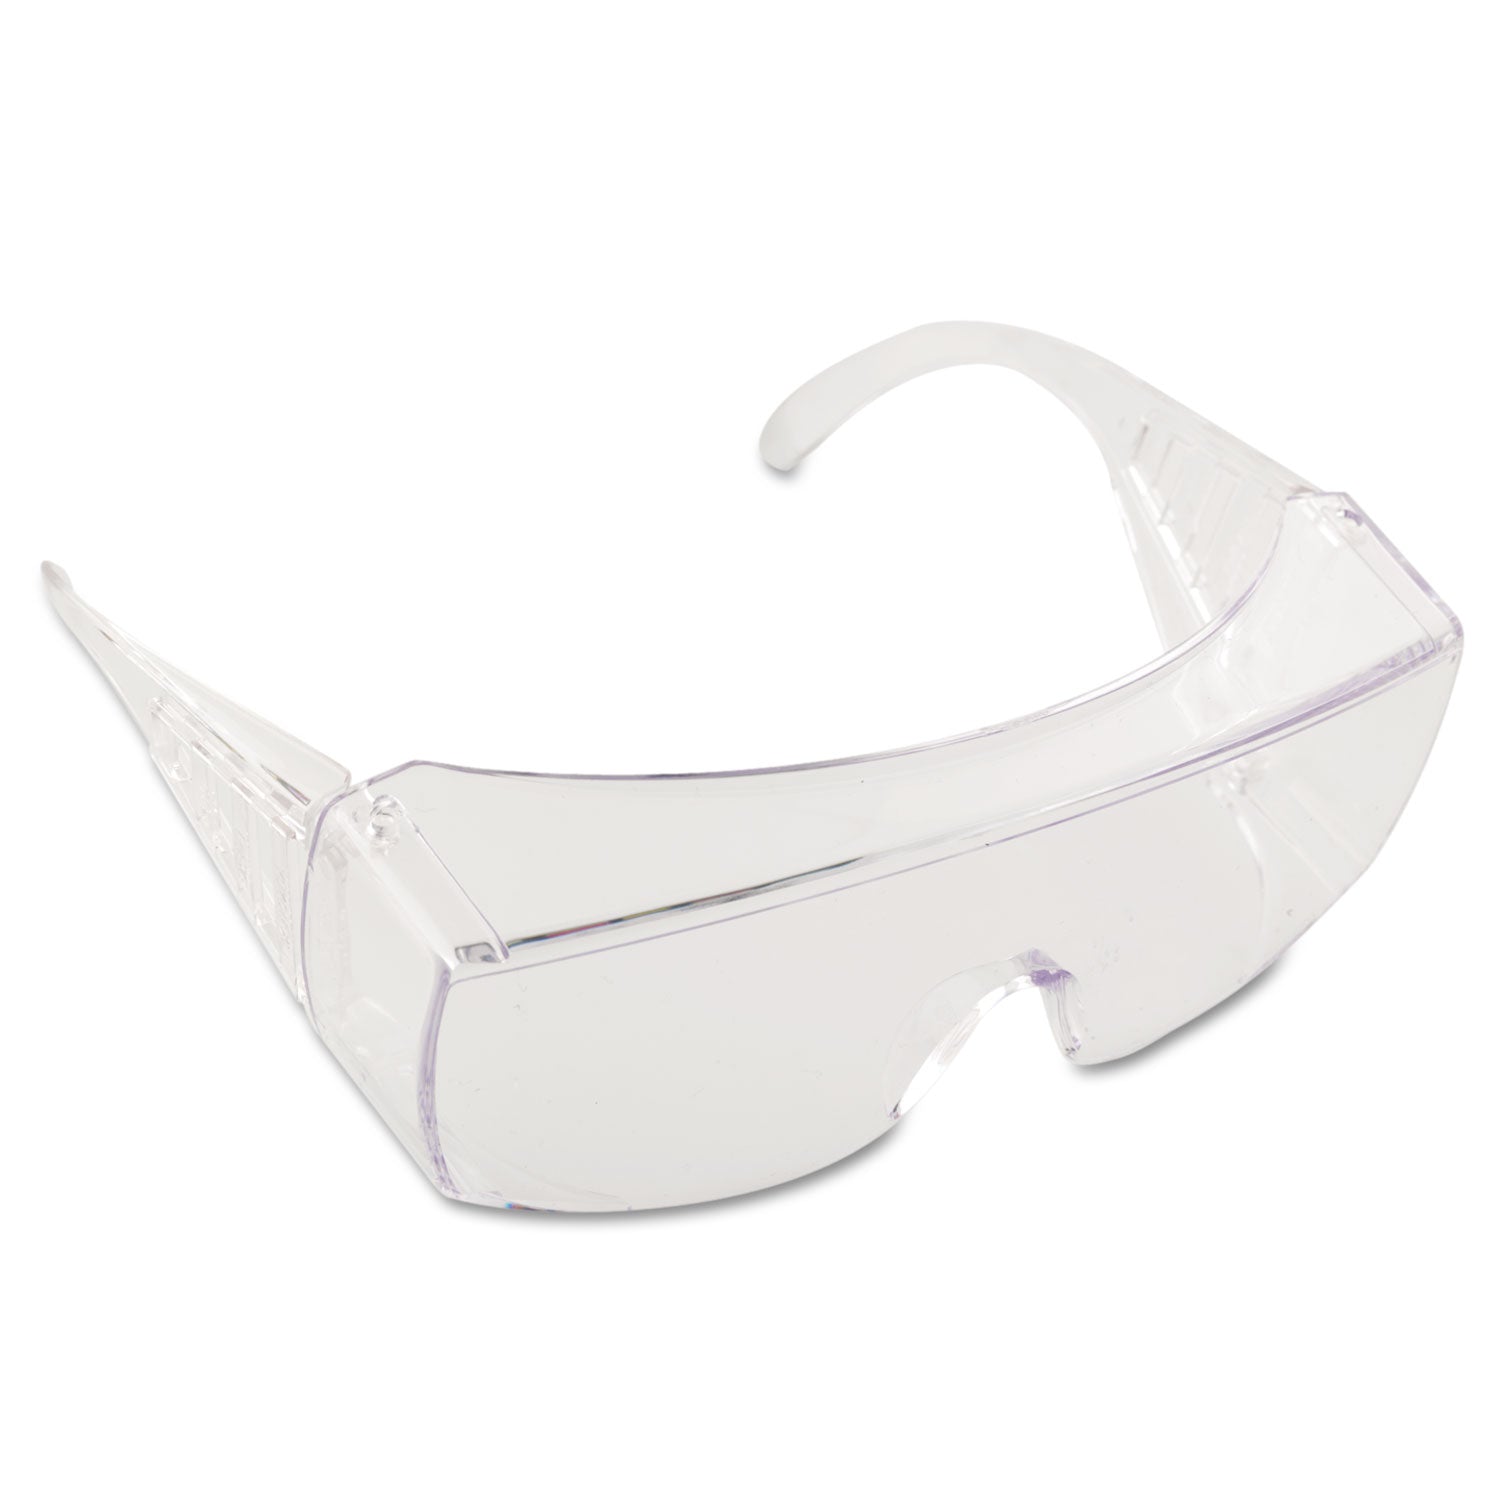 Yukon Safety Glasses, Wraparound, Clear Lens - 